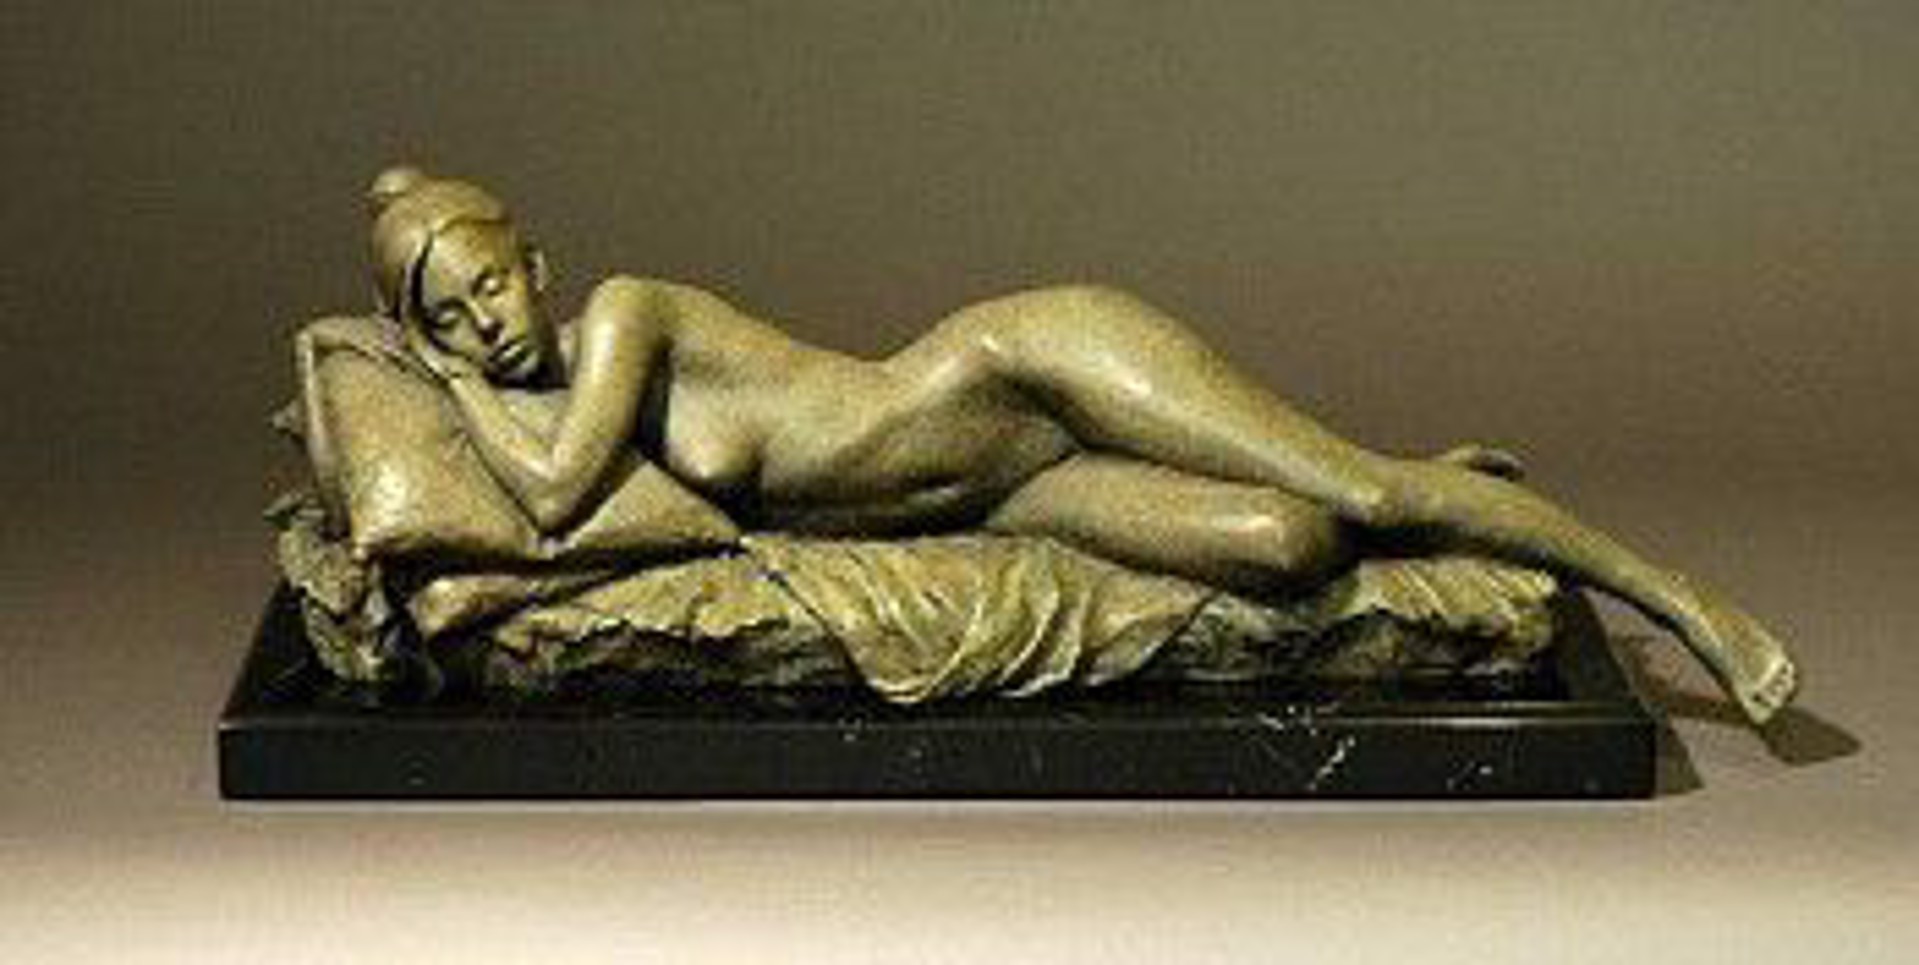 Sleeping Nude  maquette by Karl Jensen (sculptor)